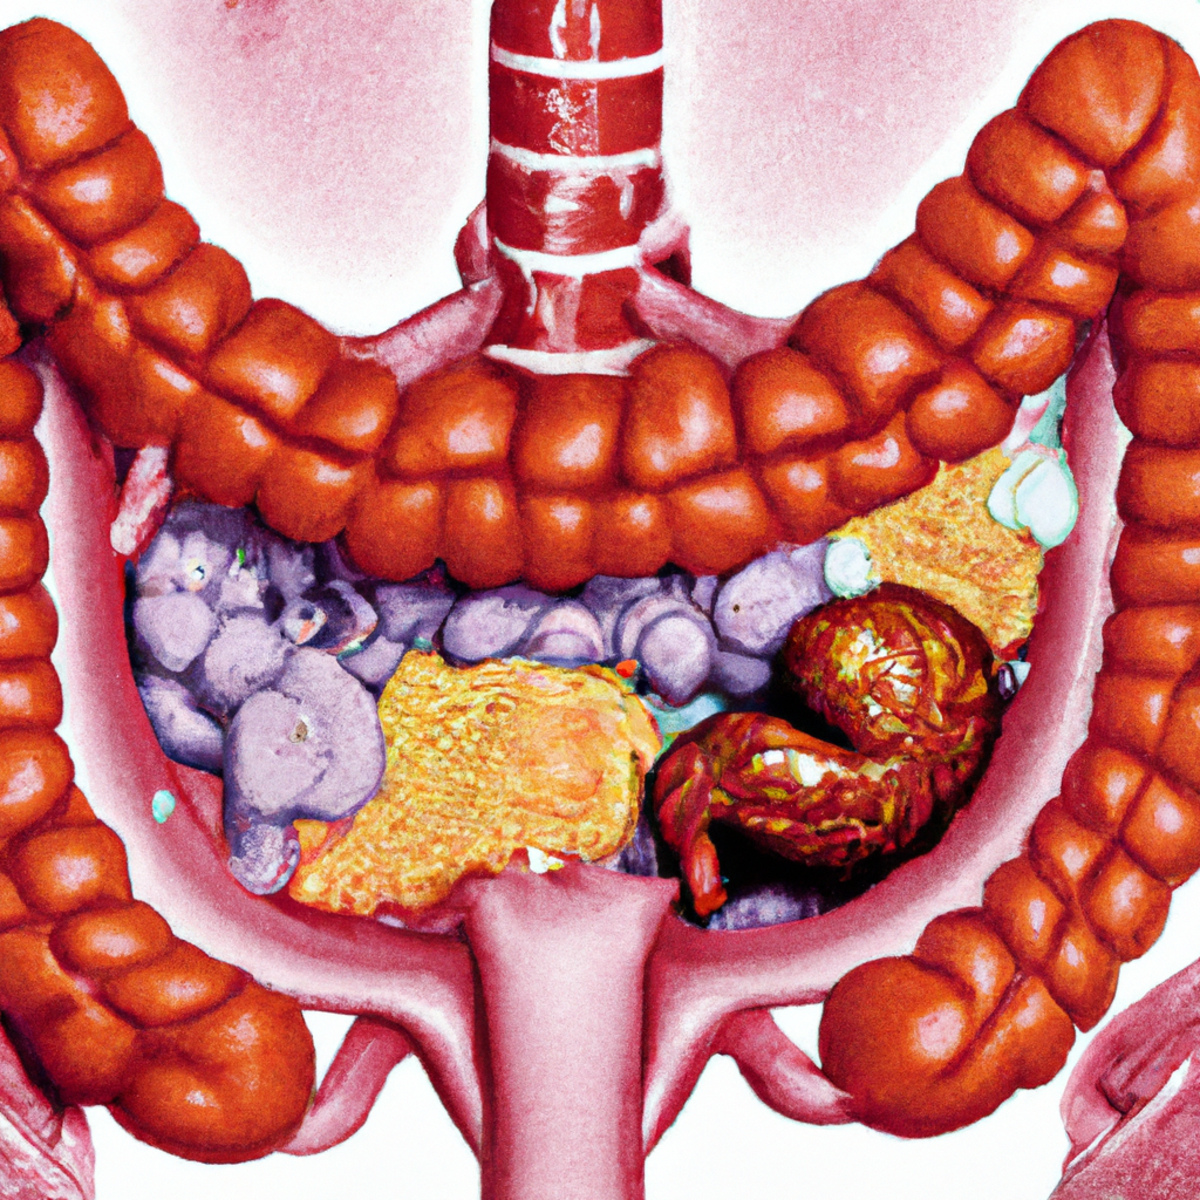 Close-up of medical illustration showing human digestive system, highlighting absence of gallbladder. Provides comprehensive visual representation of gallbladder agenesis.